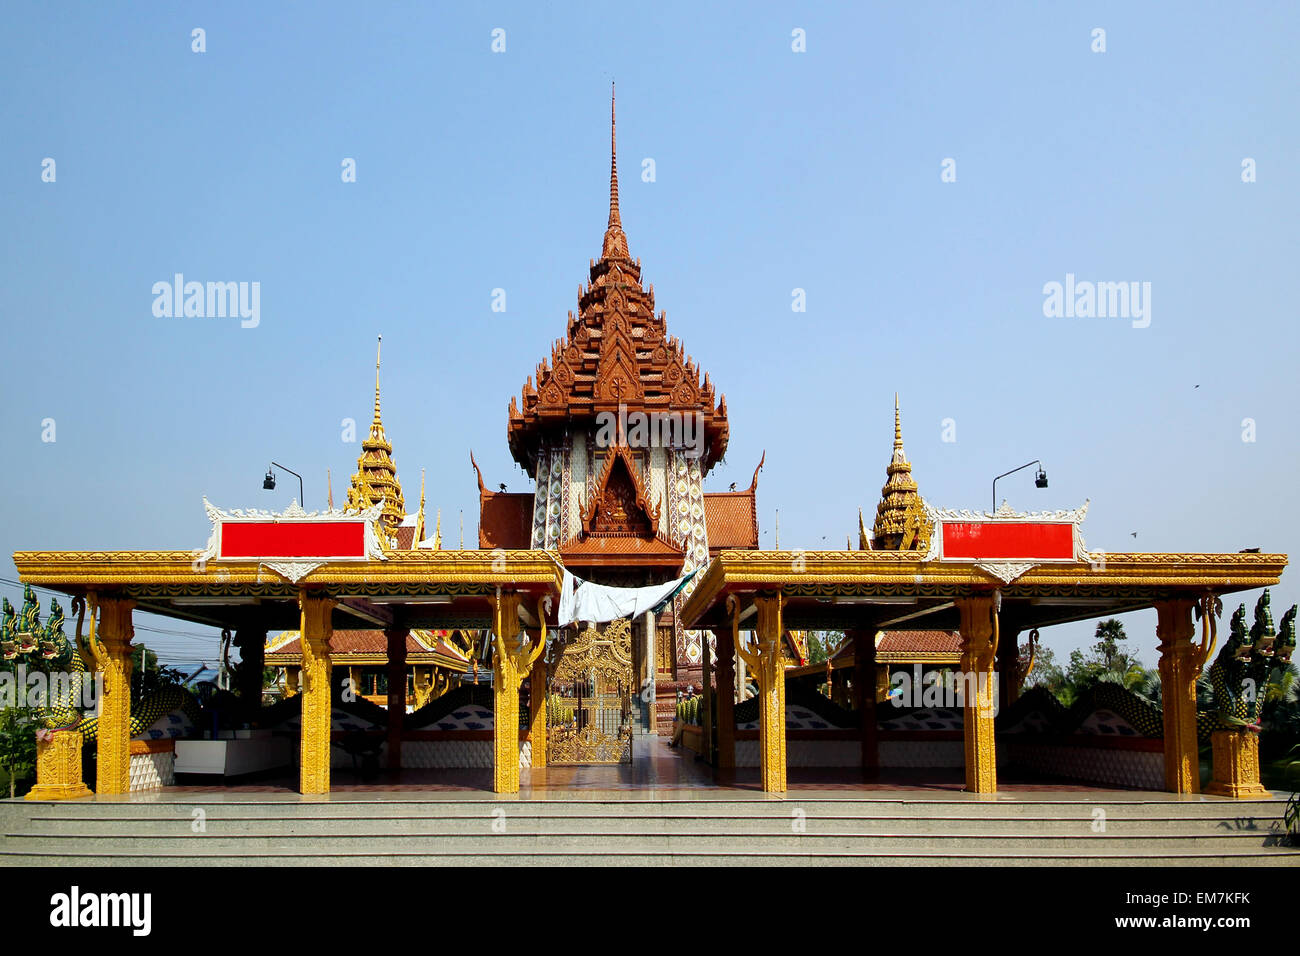 Thai temple wat phetphumsuwan, Chaiyaphum, Thailand Stock Photo